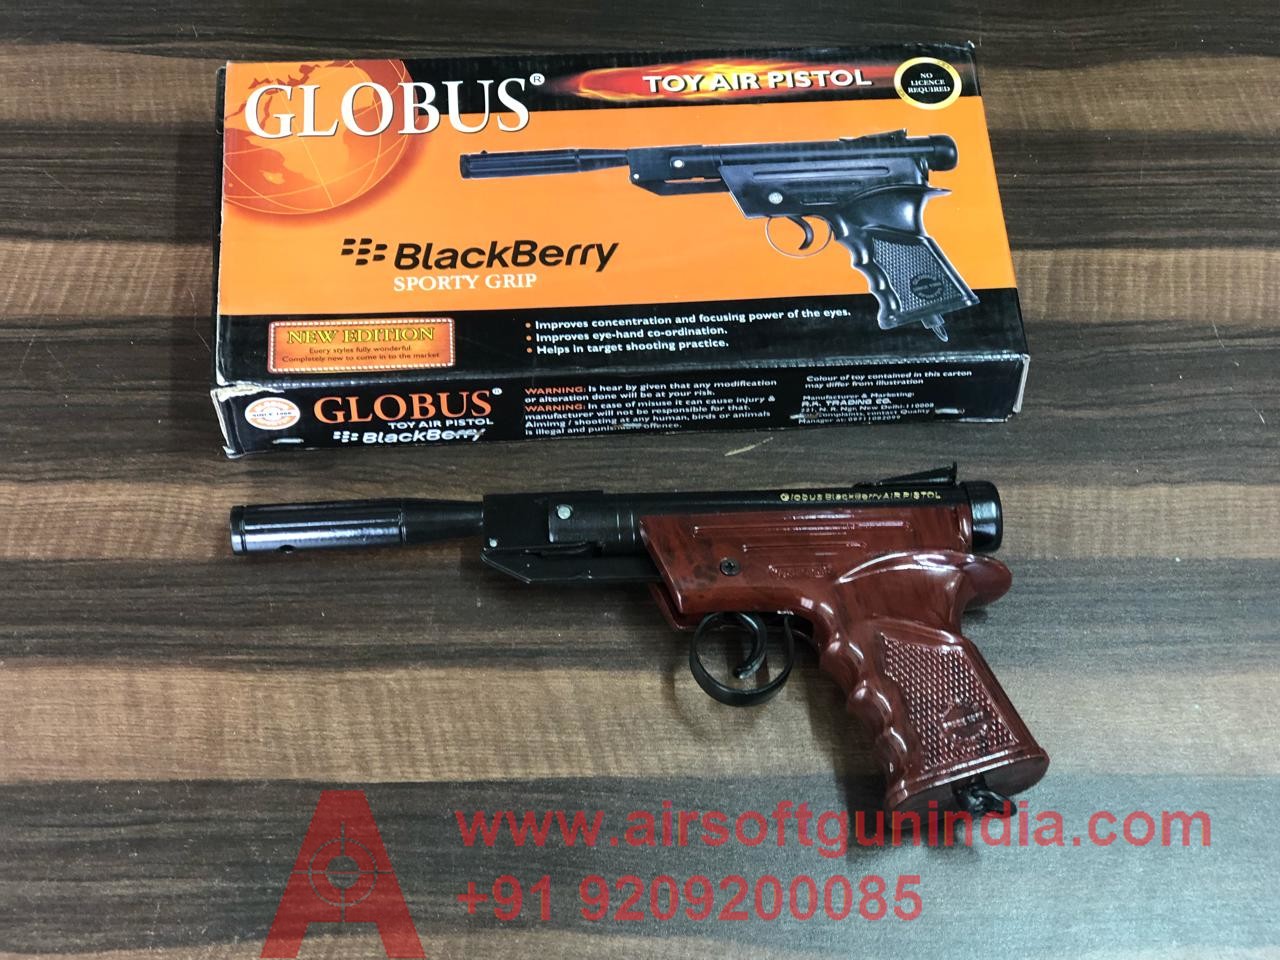 GLOBUS Blackberry Rose .177 Indian Air Pistol By Airsoft Gun India